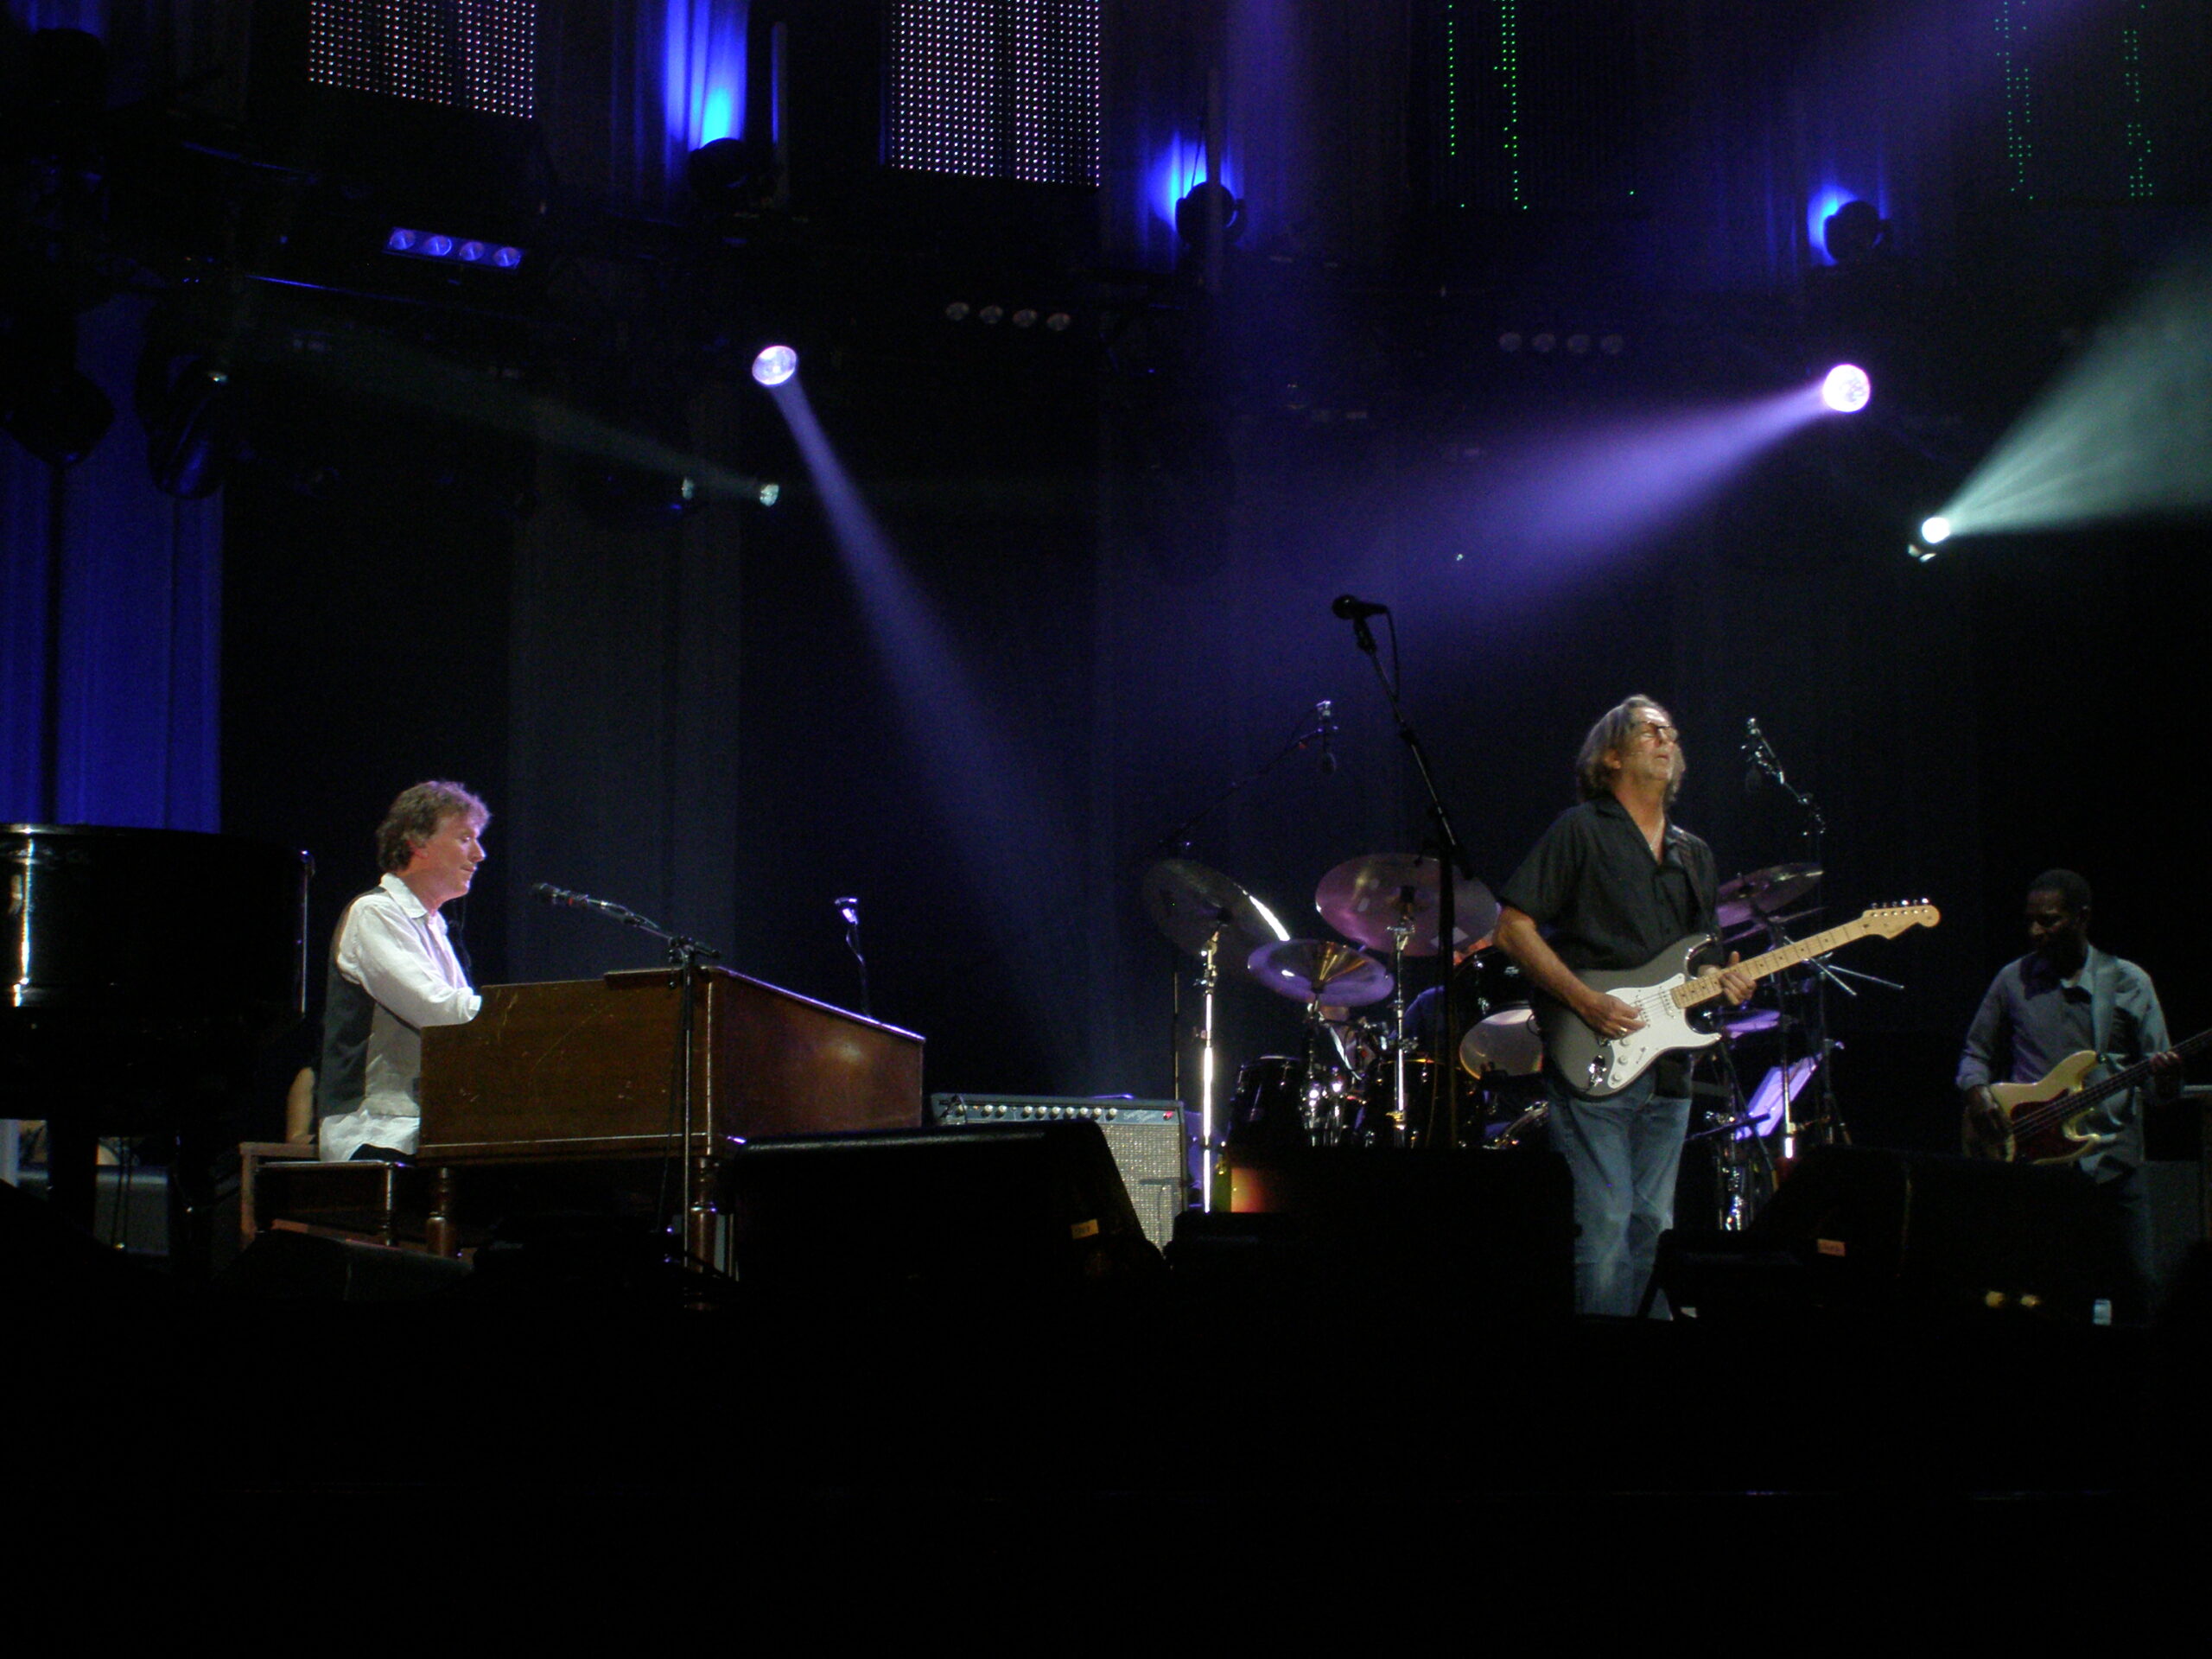 Steve Winwood, Eric Clapton and band at Wembley Arena, London 21 May 2010